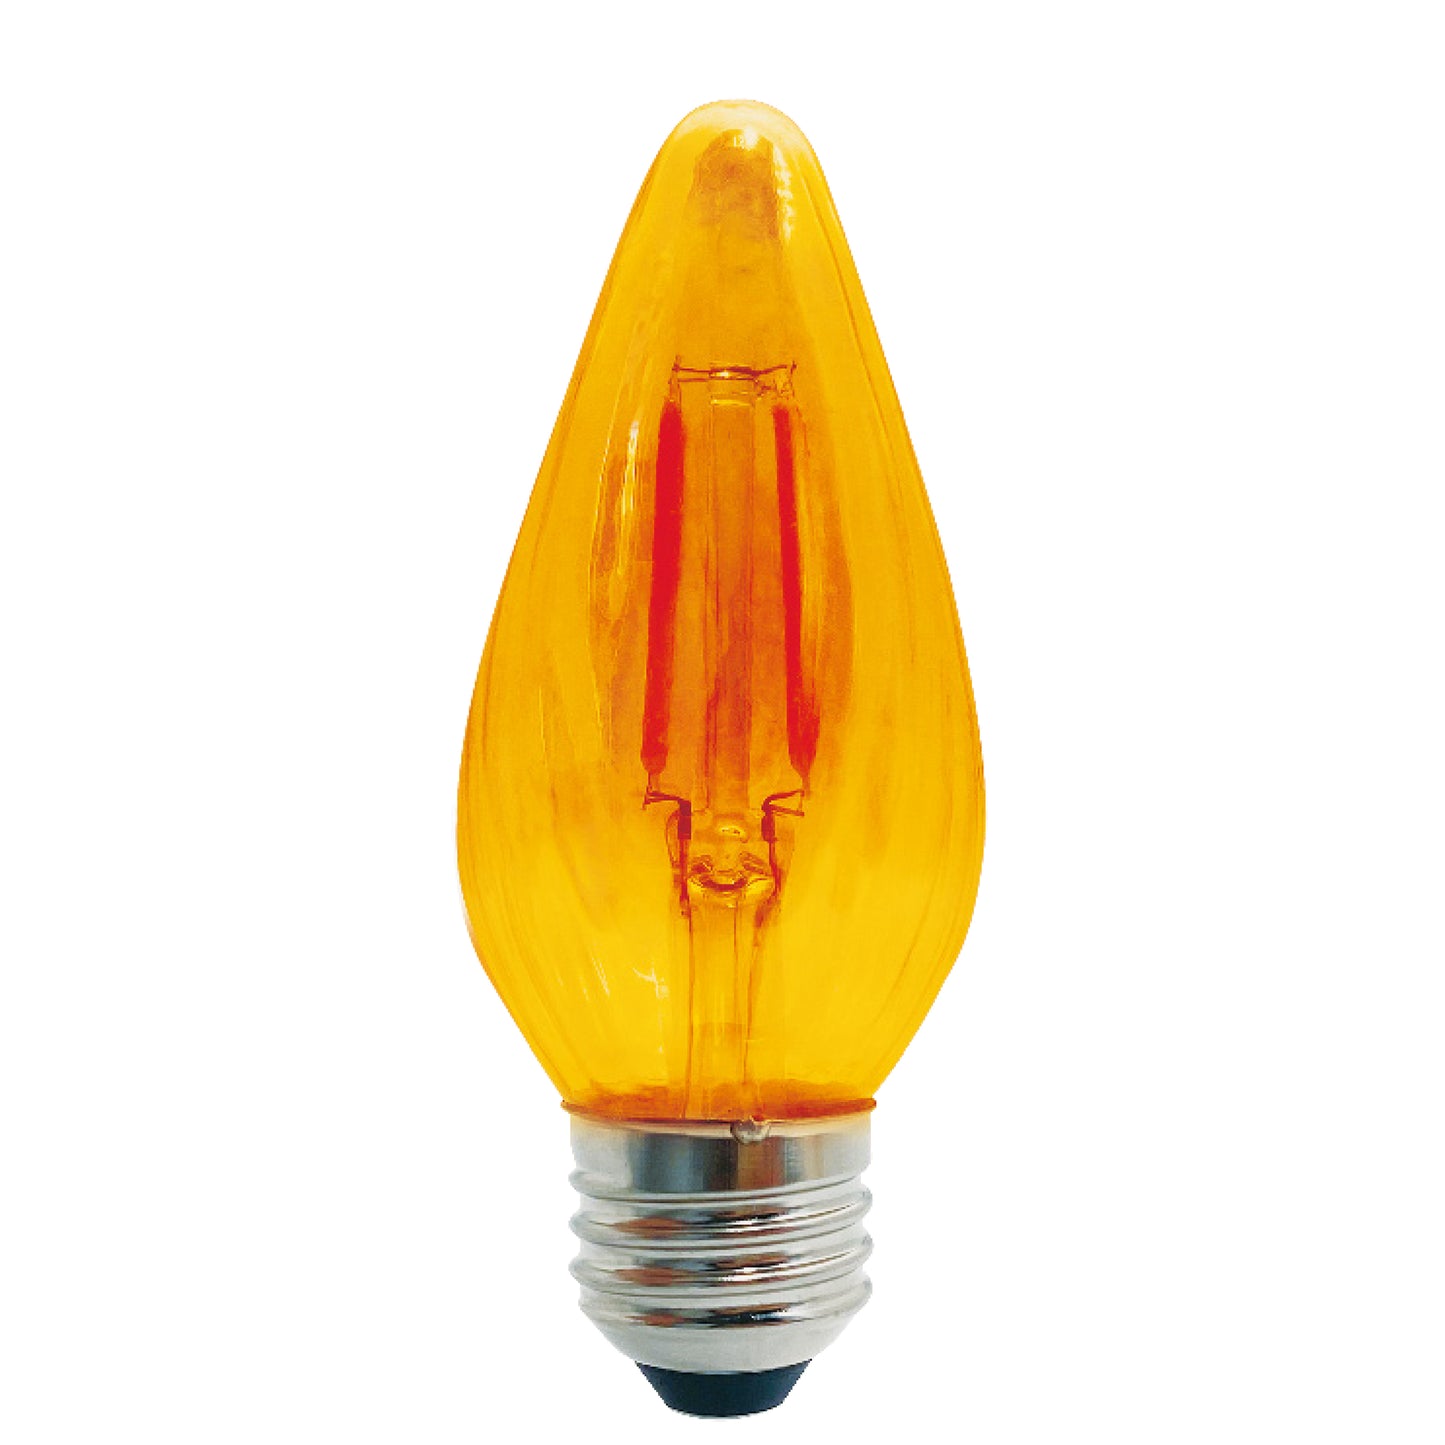 Bulbrite Fiesta 4 Watt Dimmable F15 LED Filament Light Bulb with Amber Glass Finish and Medium (E26) Base - 2100K (Amber Light), 280 Lumens